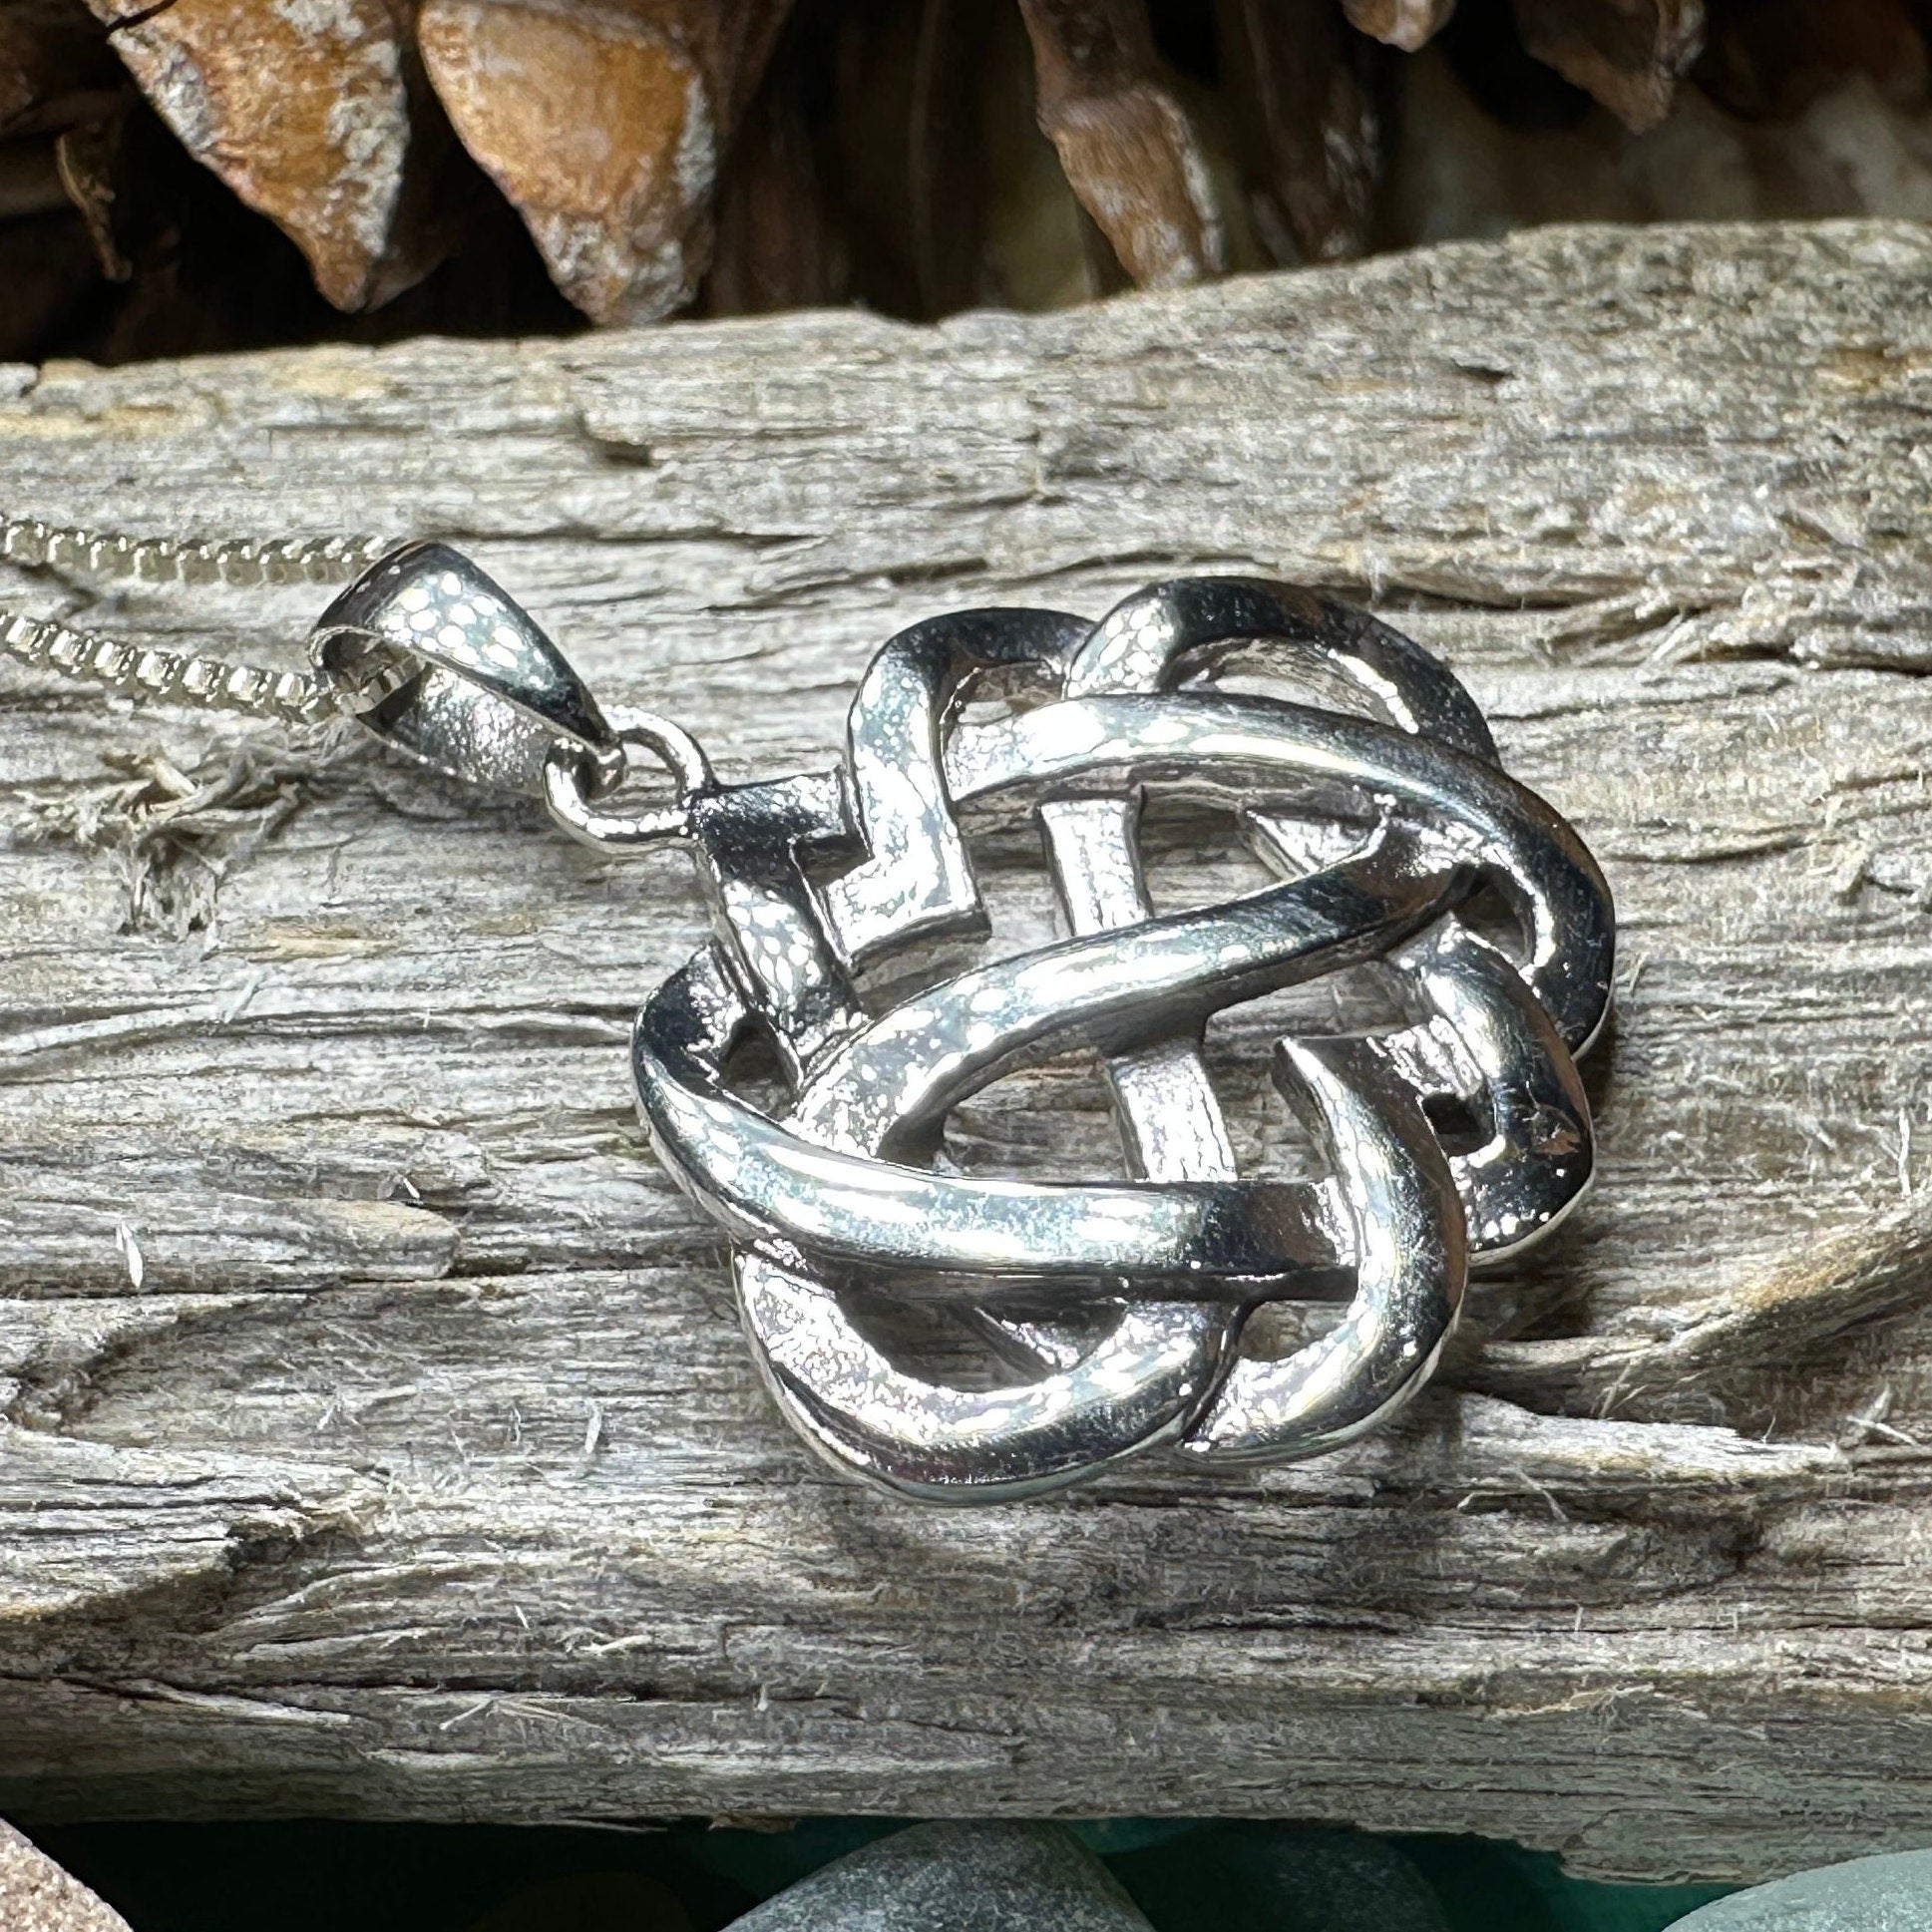 Adelaide Celtic Key Necklace – Celtic Crystal Design Jewelry